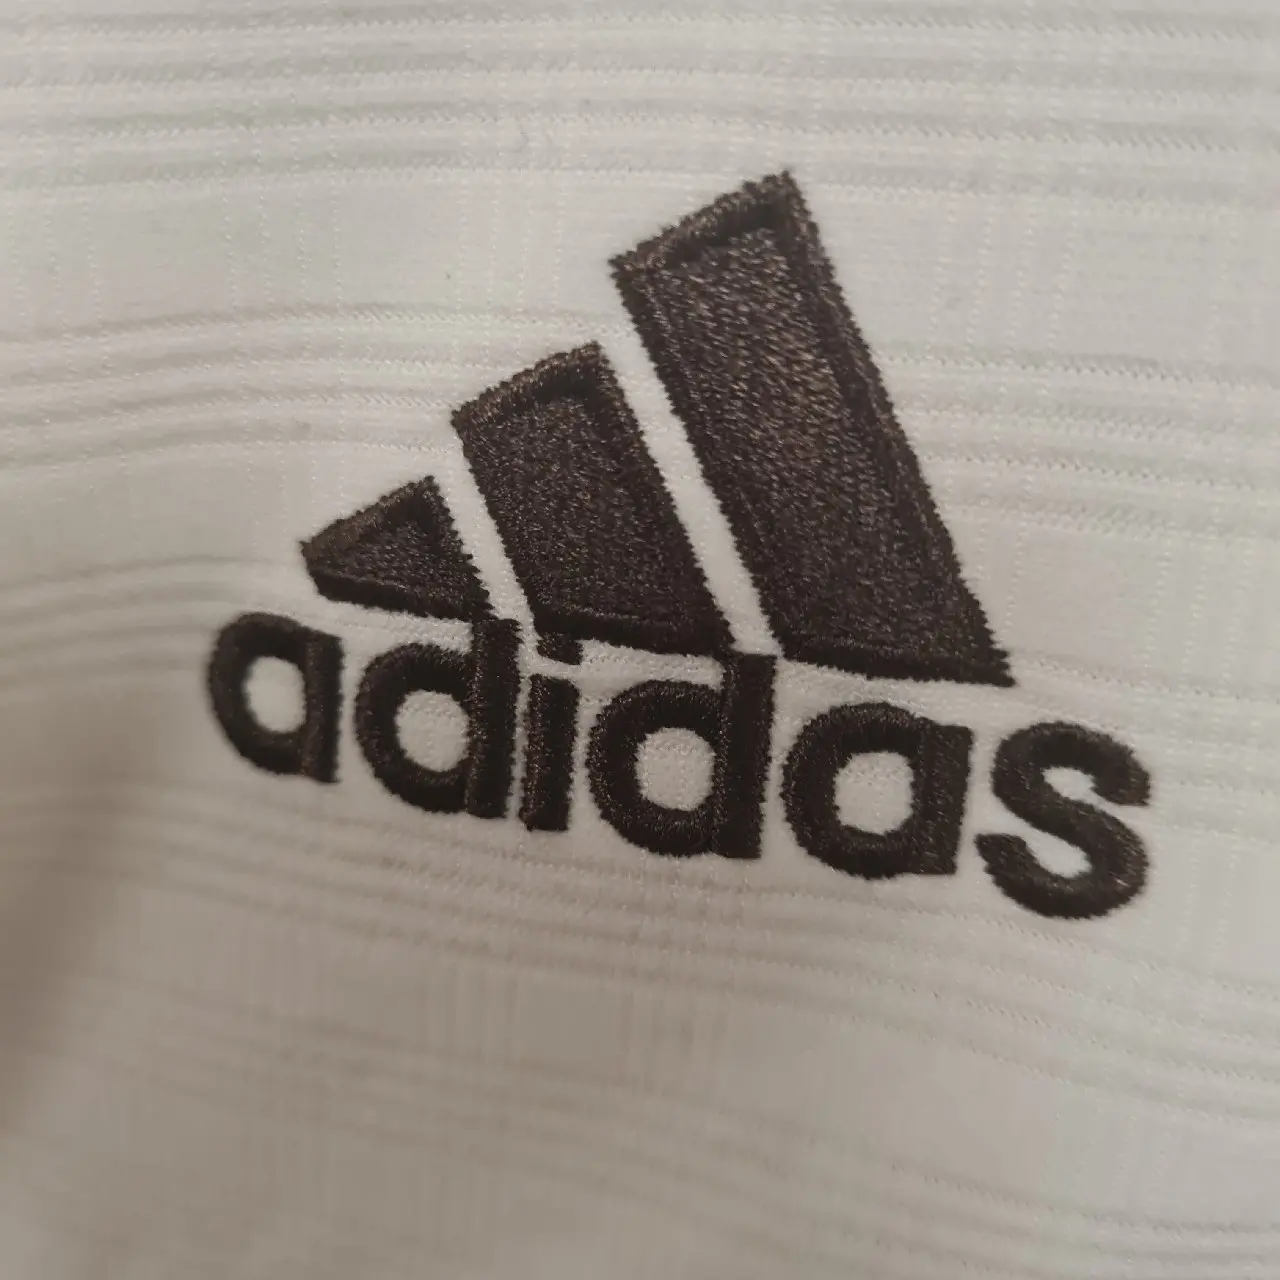 Adidas t-shirt